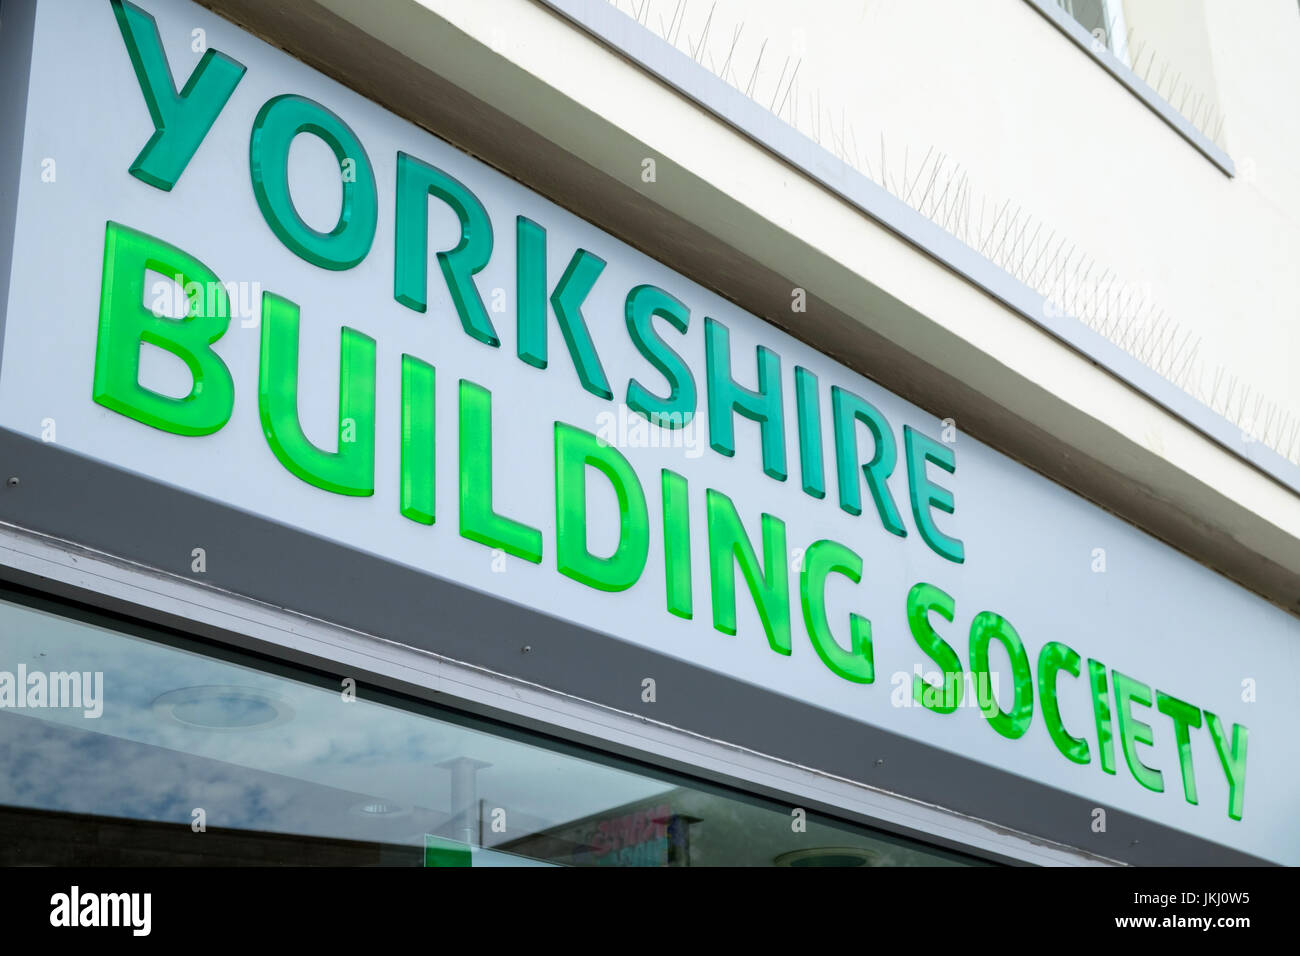 Yorkshire Building Society, Southampton, Hampshire, Royaume-Uni Banque D'Images